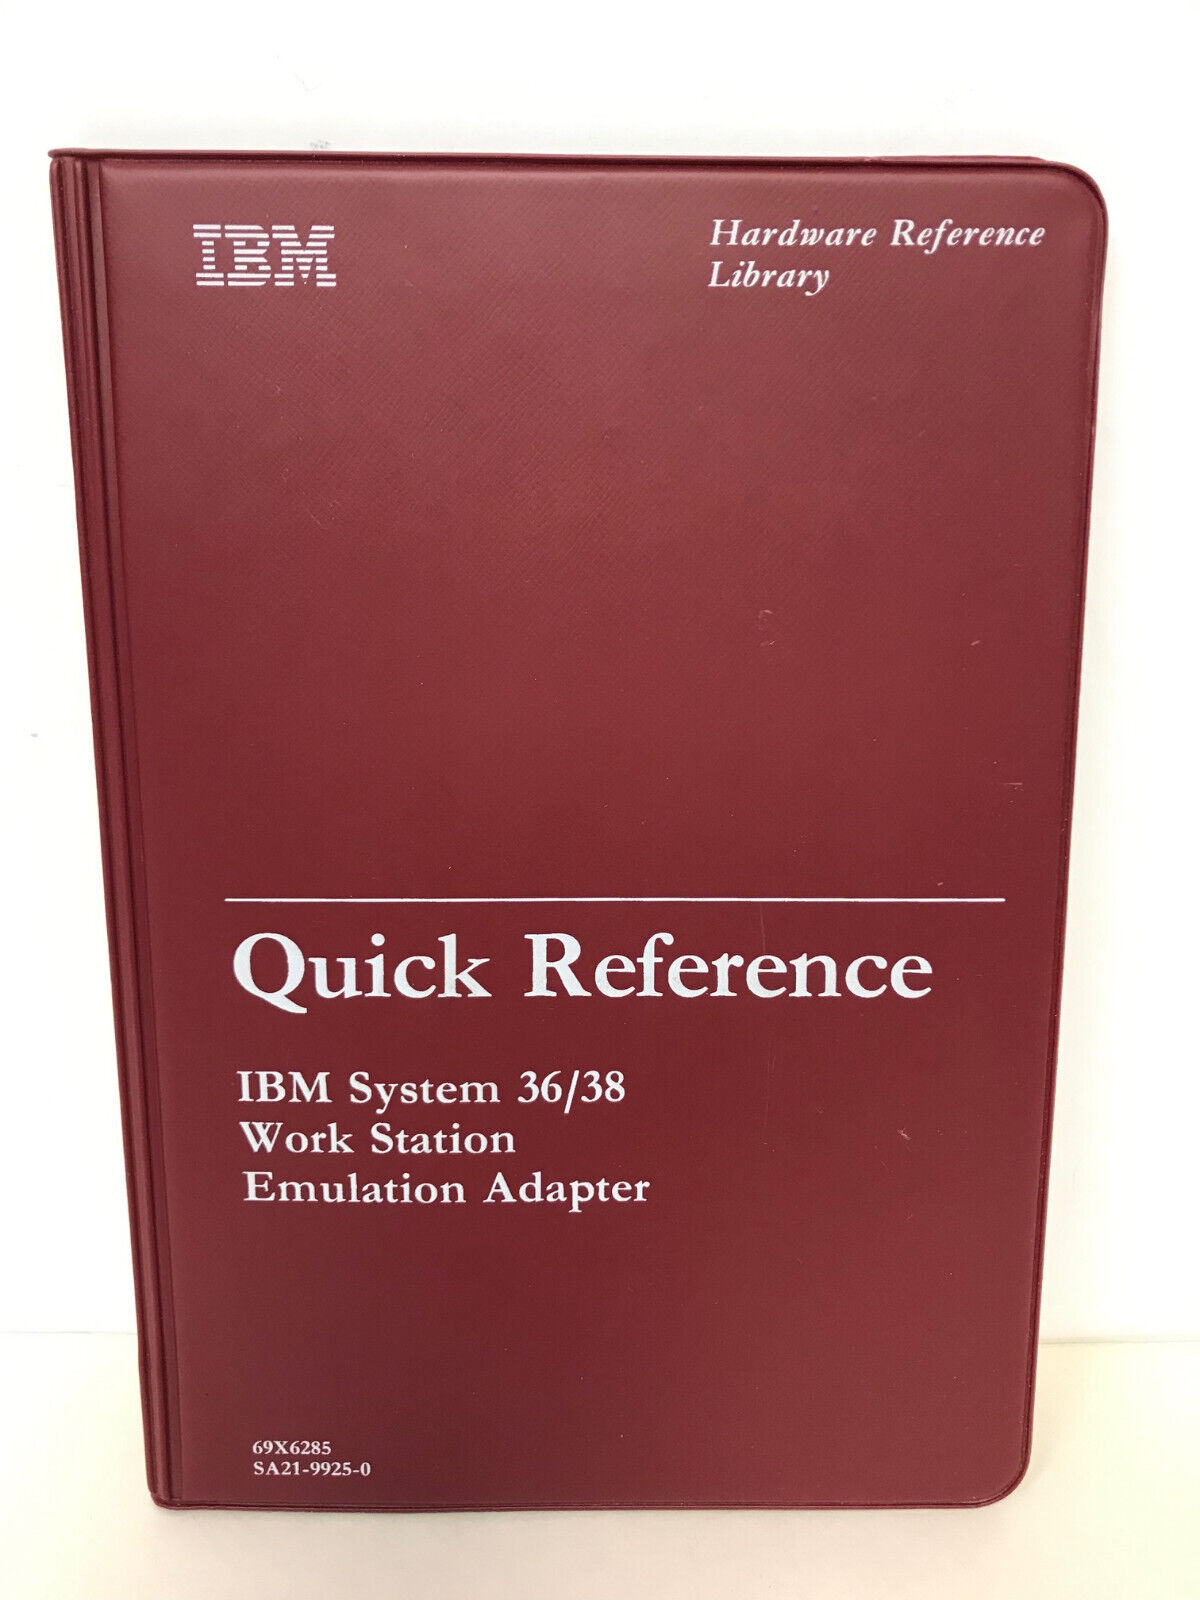 IBM SYSTEM 36/38 WORK STATION EMULATION ADAPTER QUICK REFERENCE 69X6285